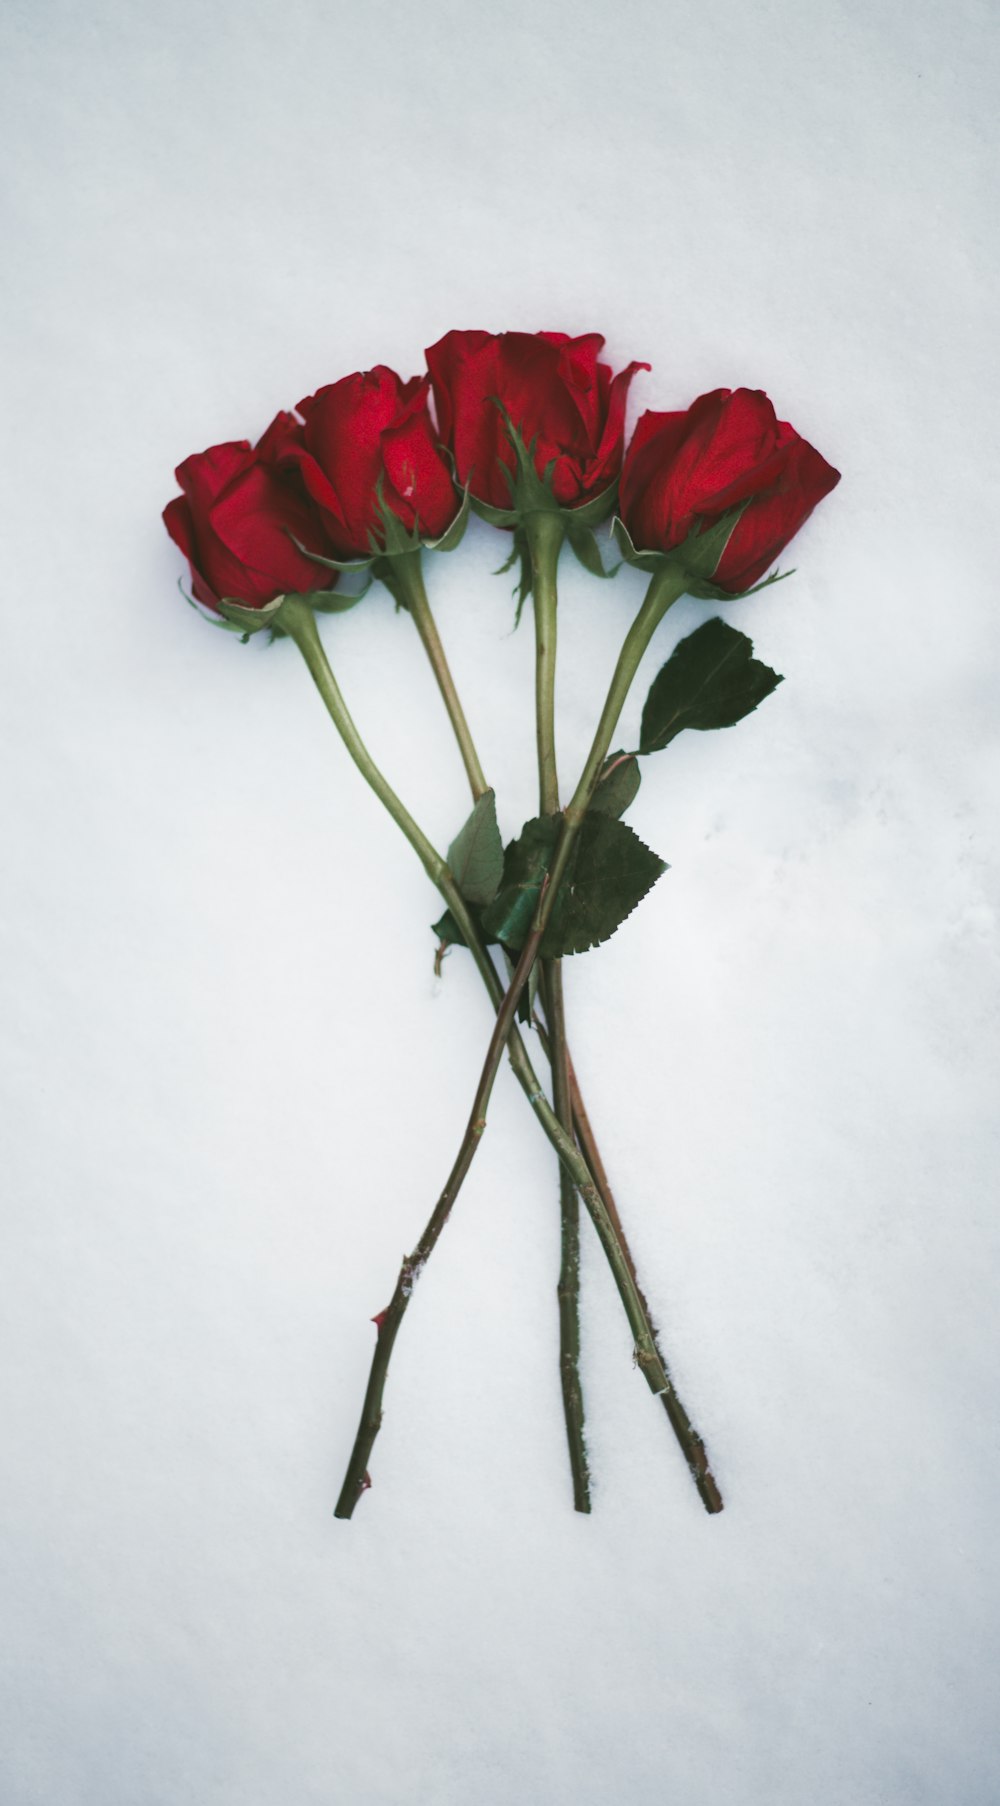 Flores de rosas rojas sobre superficie blanca